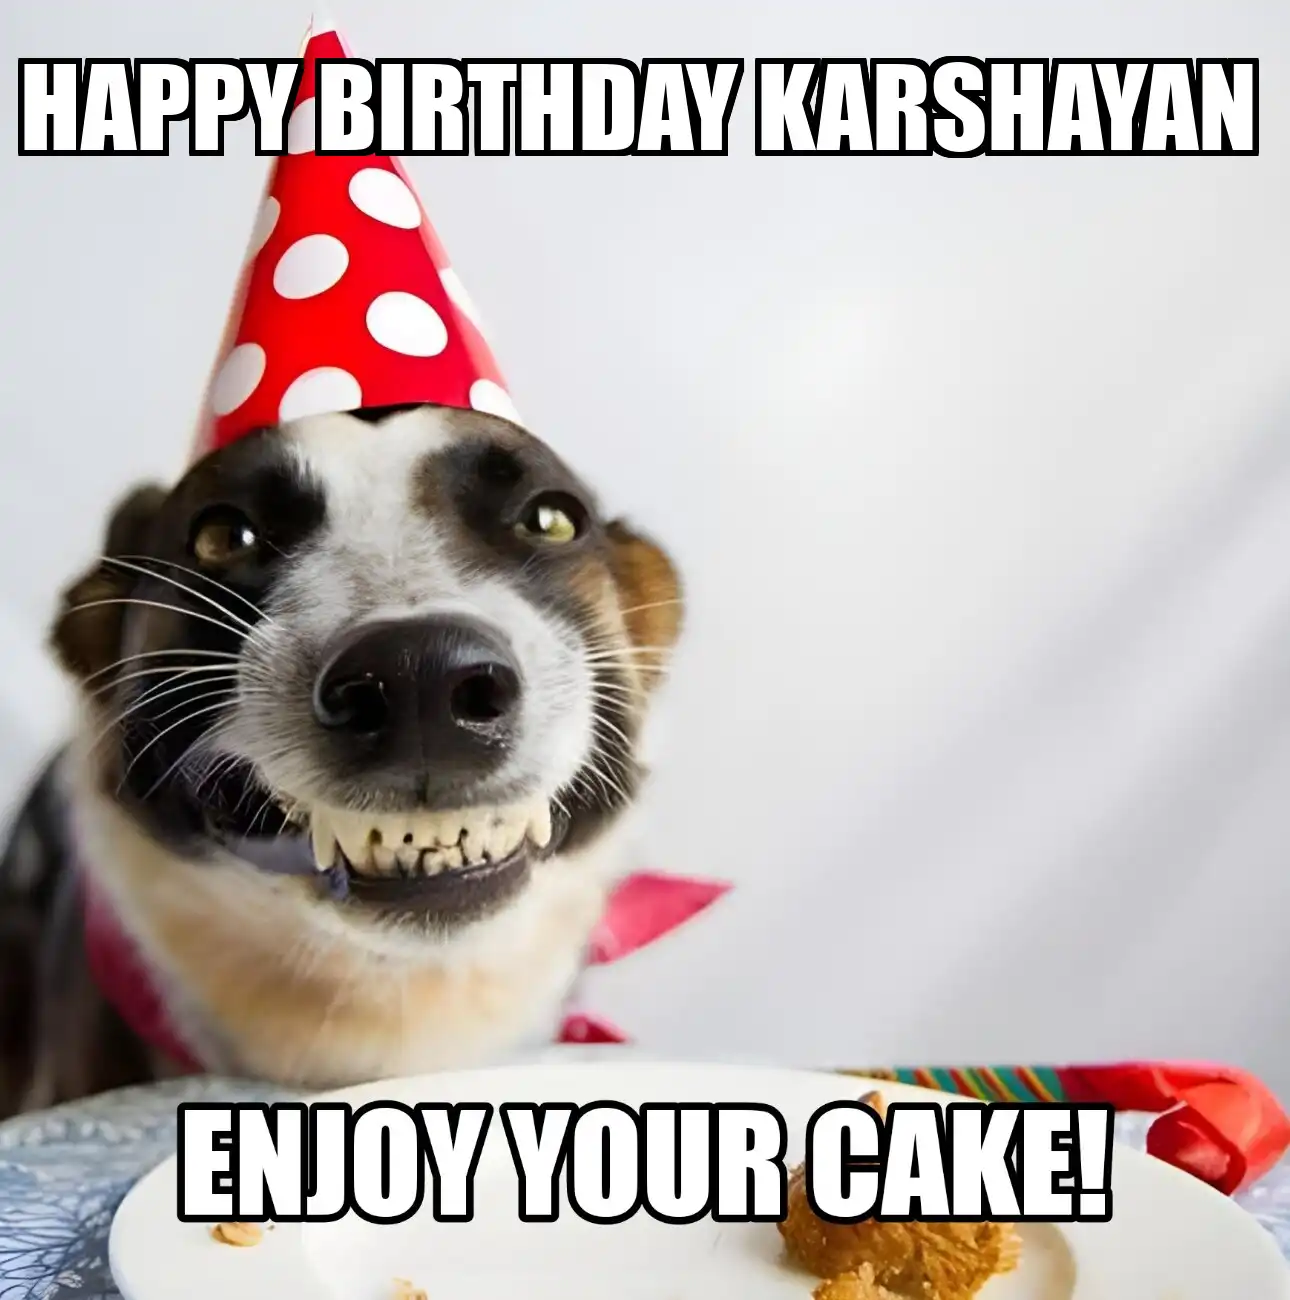 Happy Birthday Karshayan Enjoy Your Cake Dog Meme